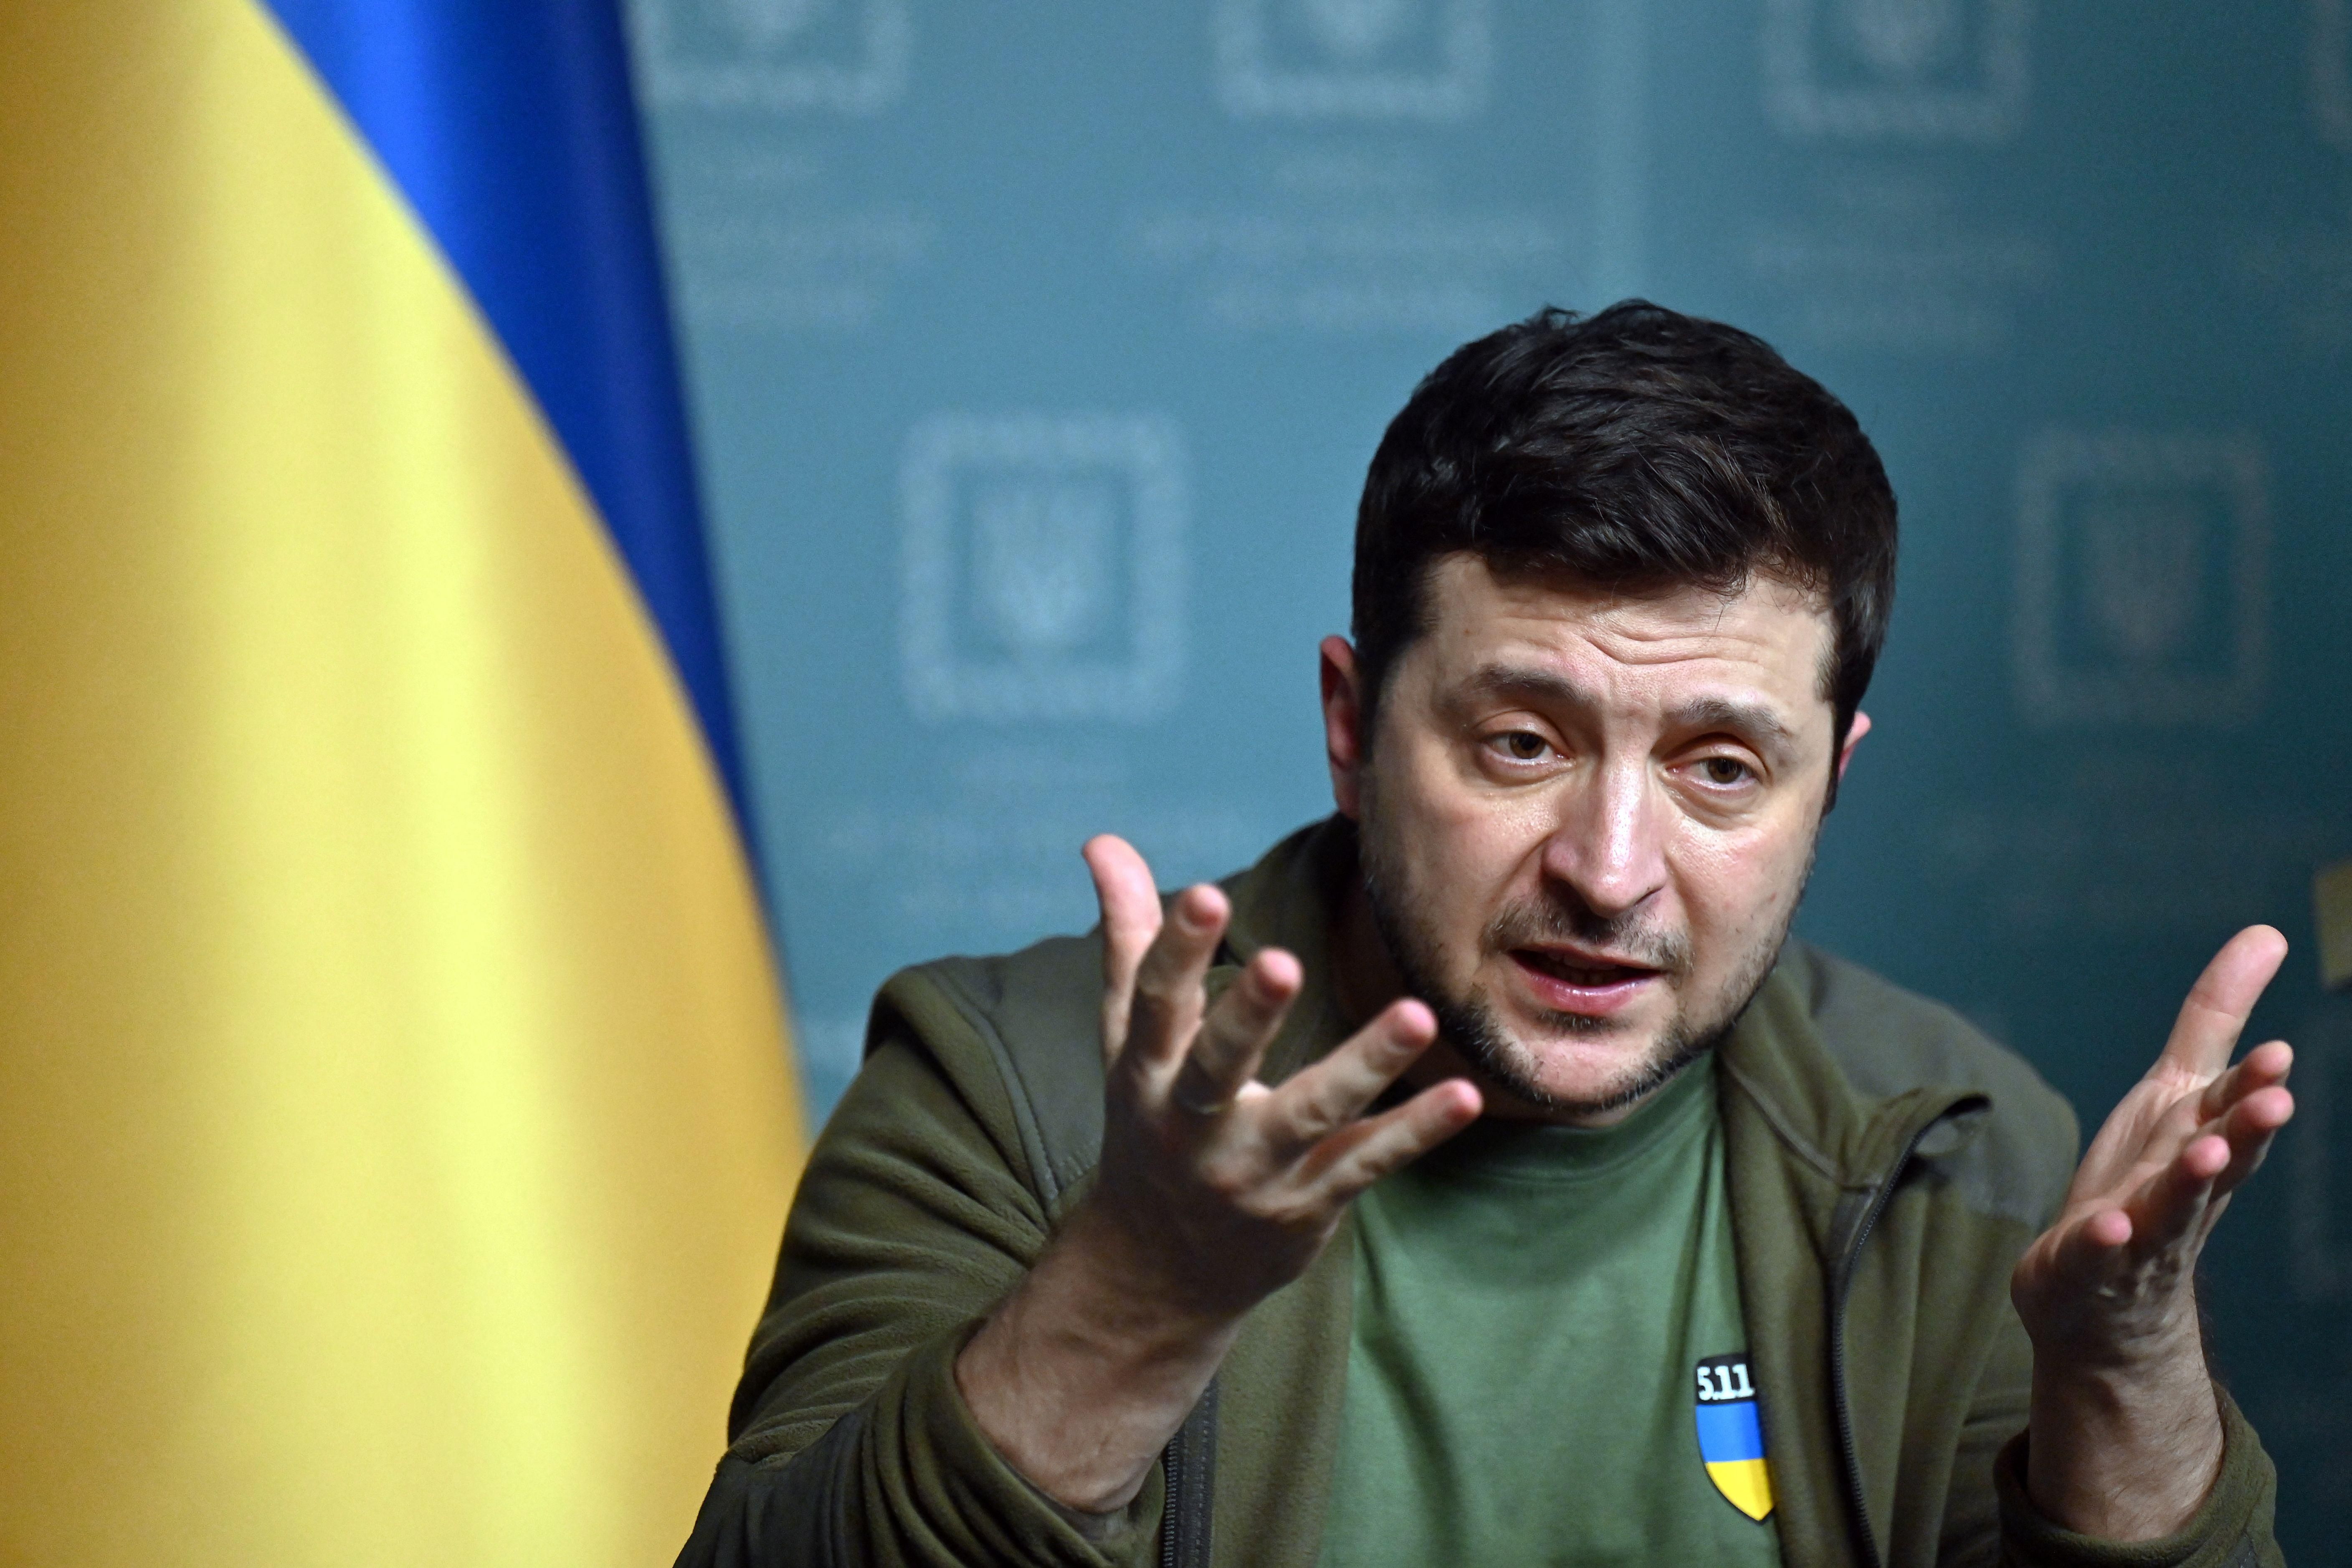 Ukrainian President Volodymyr Zelenskyy speaks during a press conference in Kyiv on March 3, 2022.